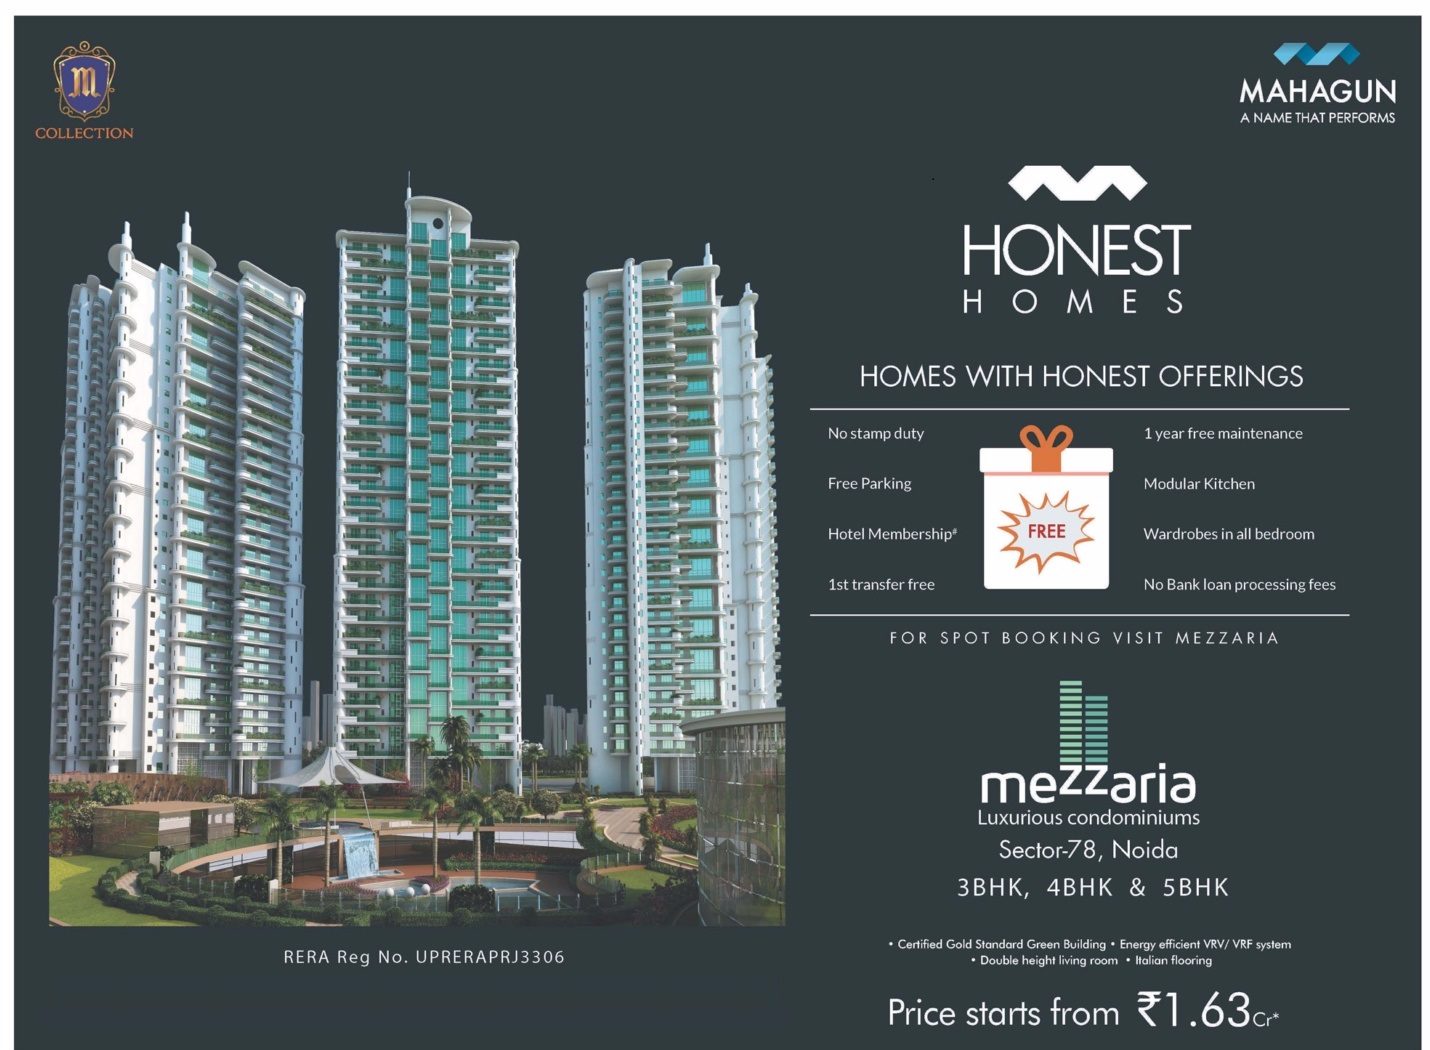 Homes with honest offerings at Mahagun Mezzaria in Noida Update